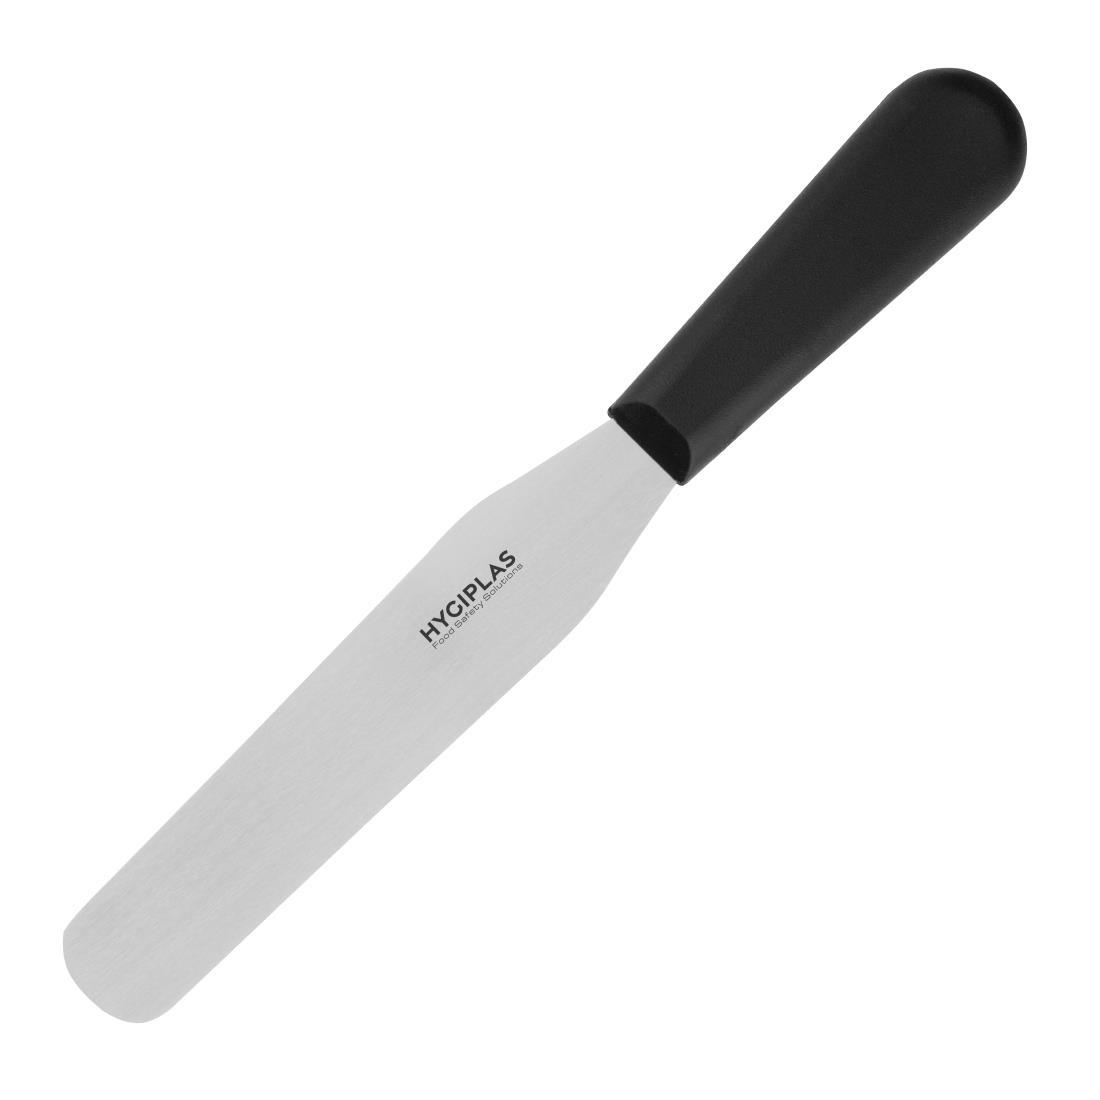 Hygiplas Straight Blade Palette Knife Black 15cm - D402  - 1